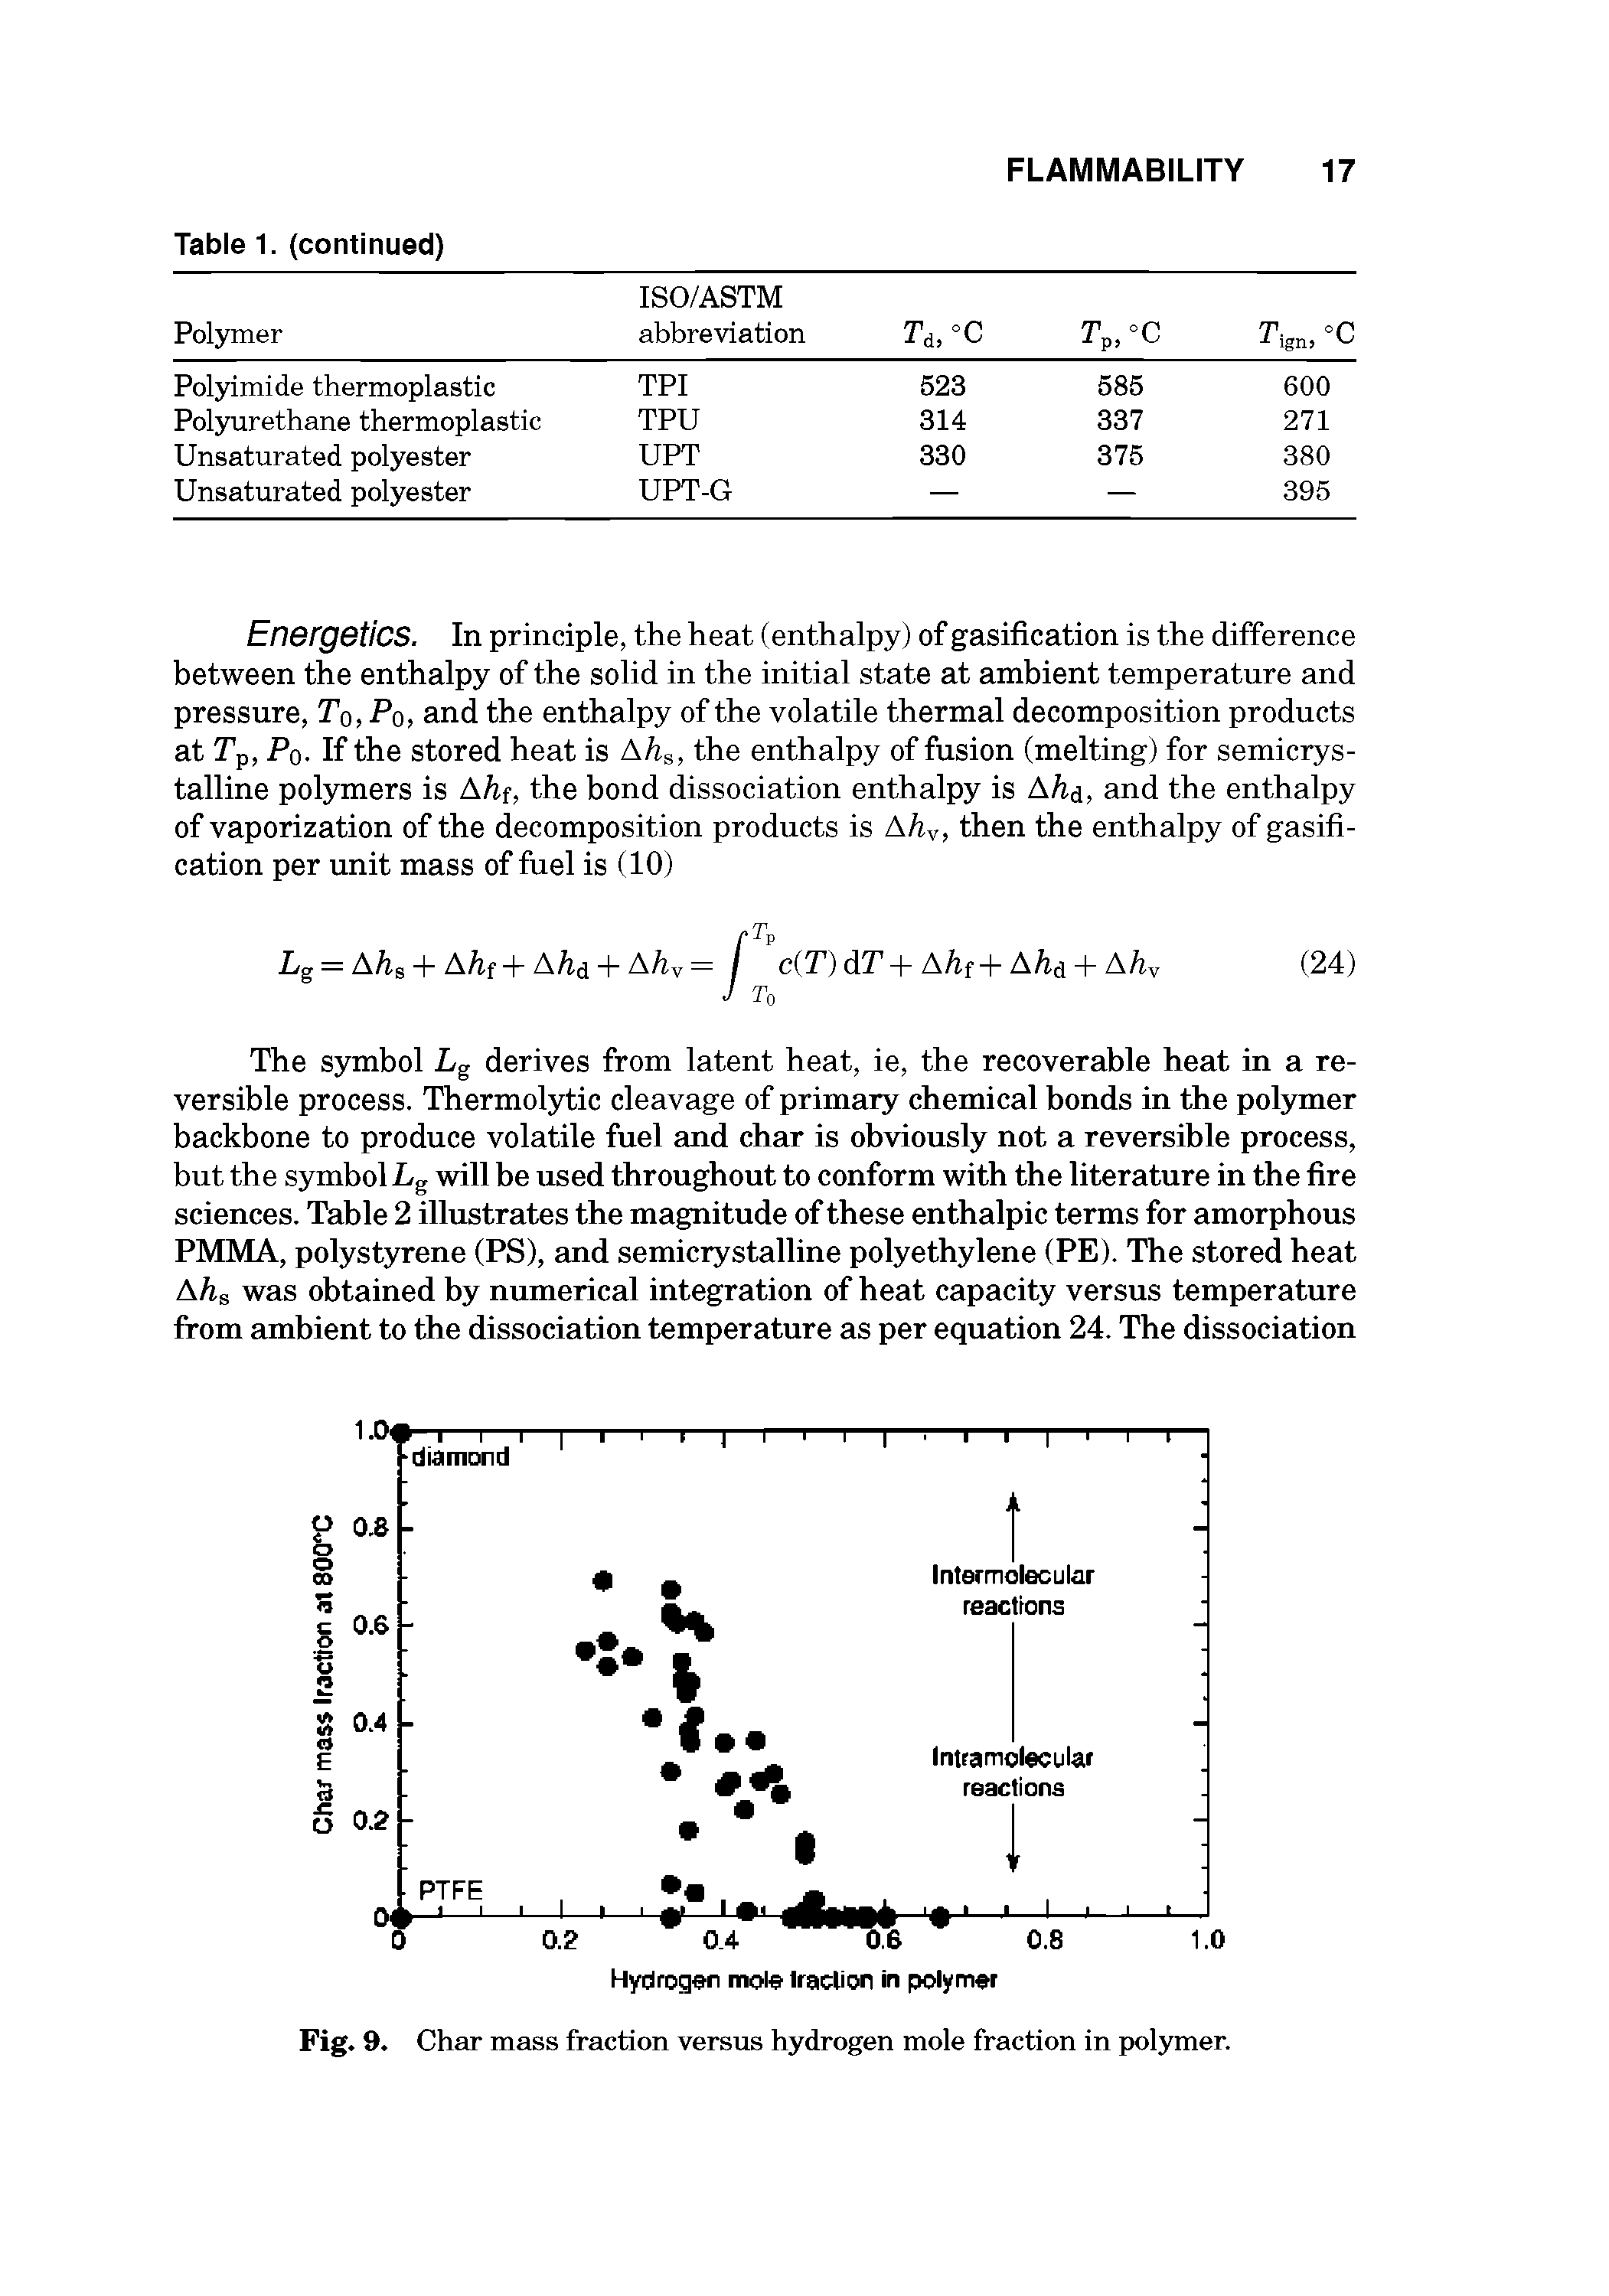 Fig. 9. Char mass fraction versus hydrogen mole fraction in polymer.